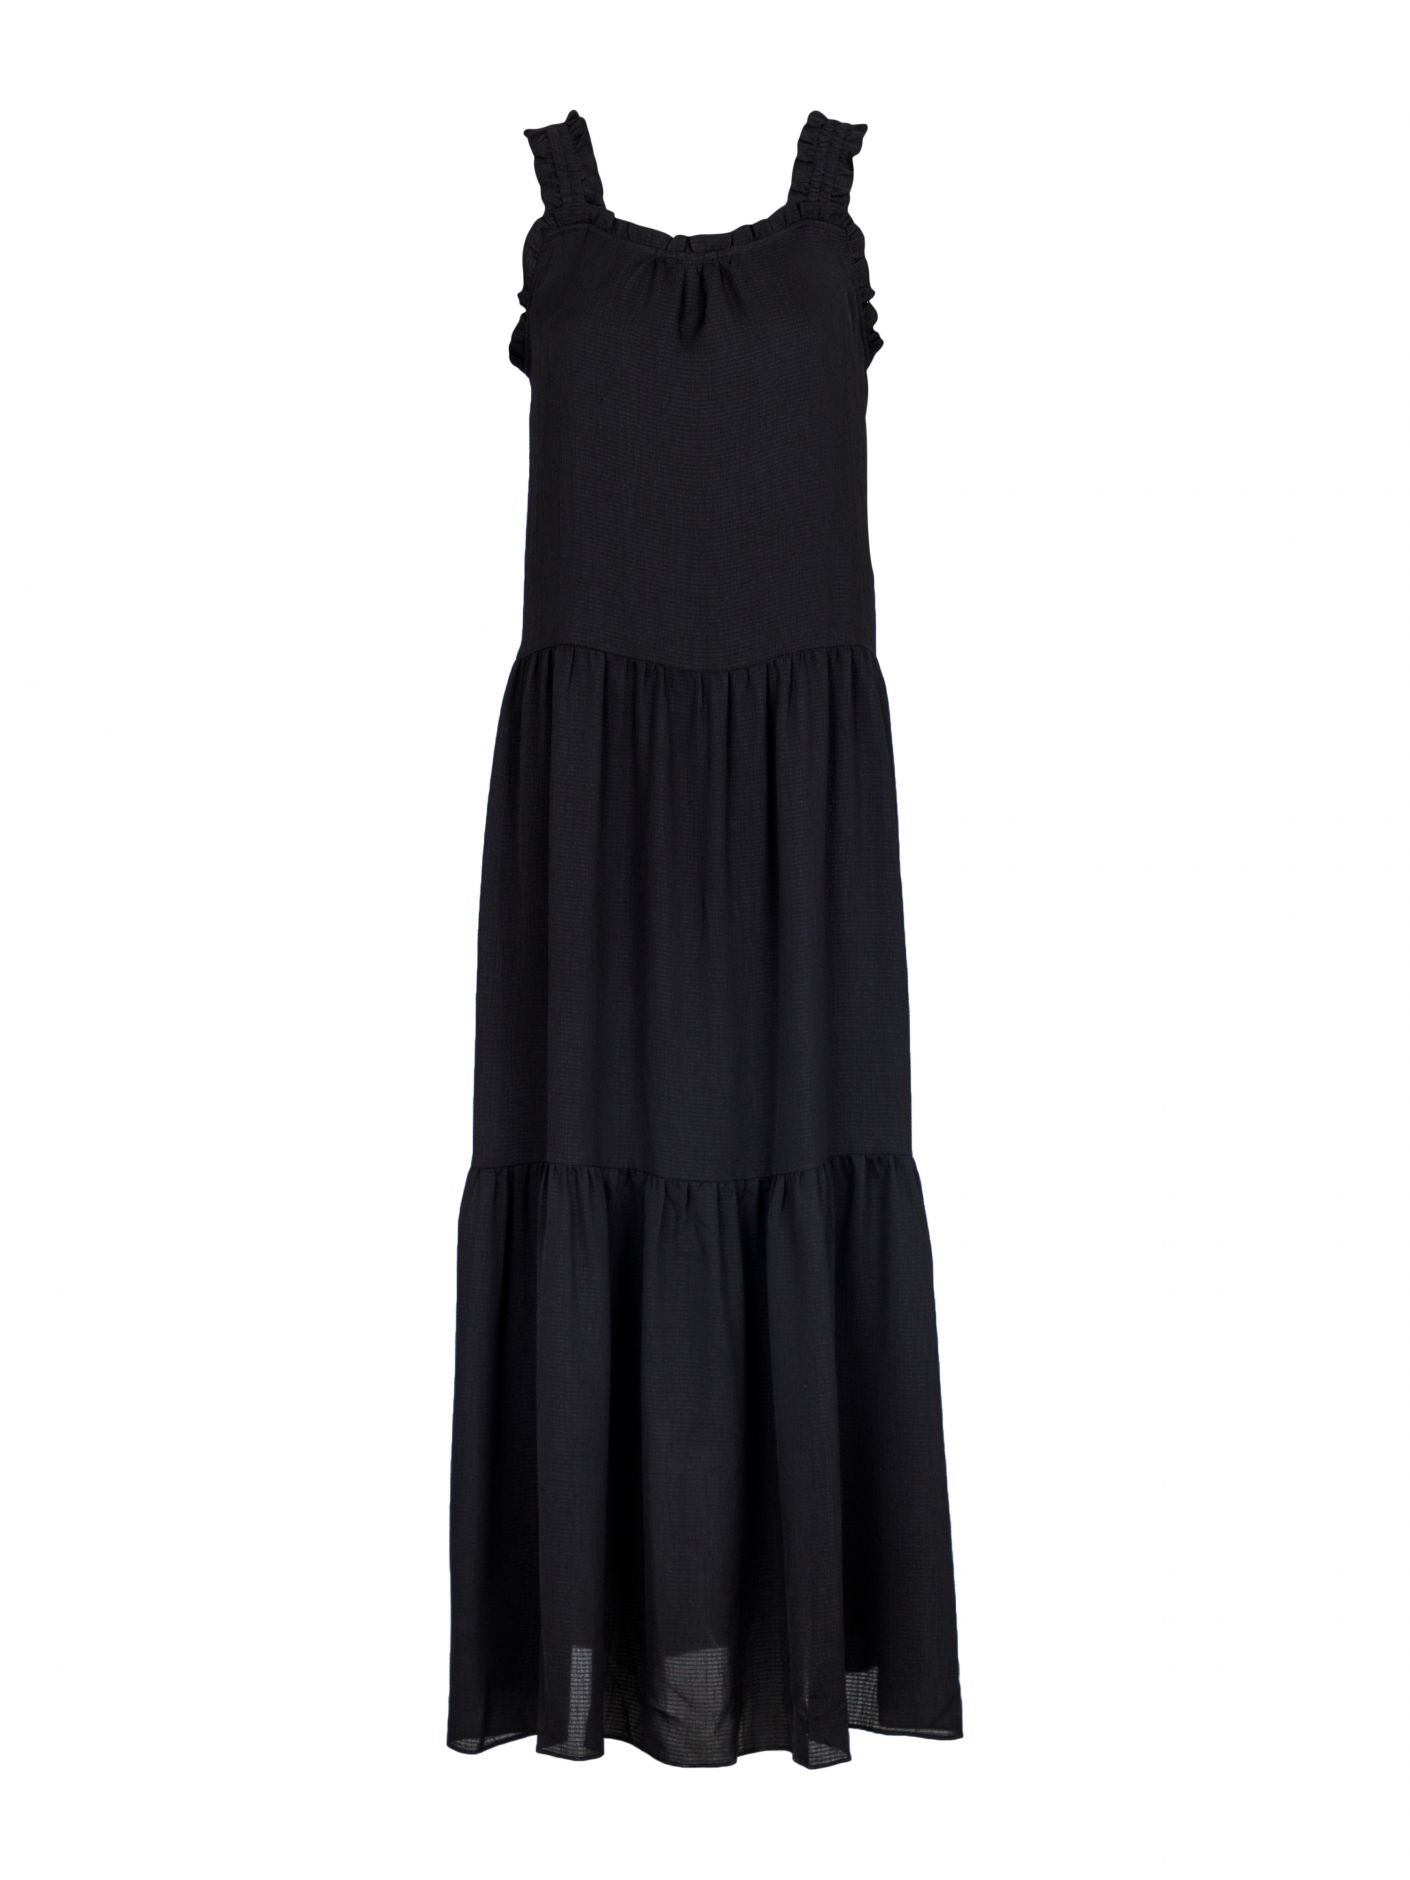 For tidlig Do trend Neo Noir - Arisona Crepe Dress Black - Butik Emsig